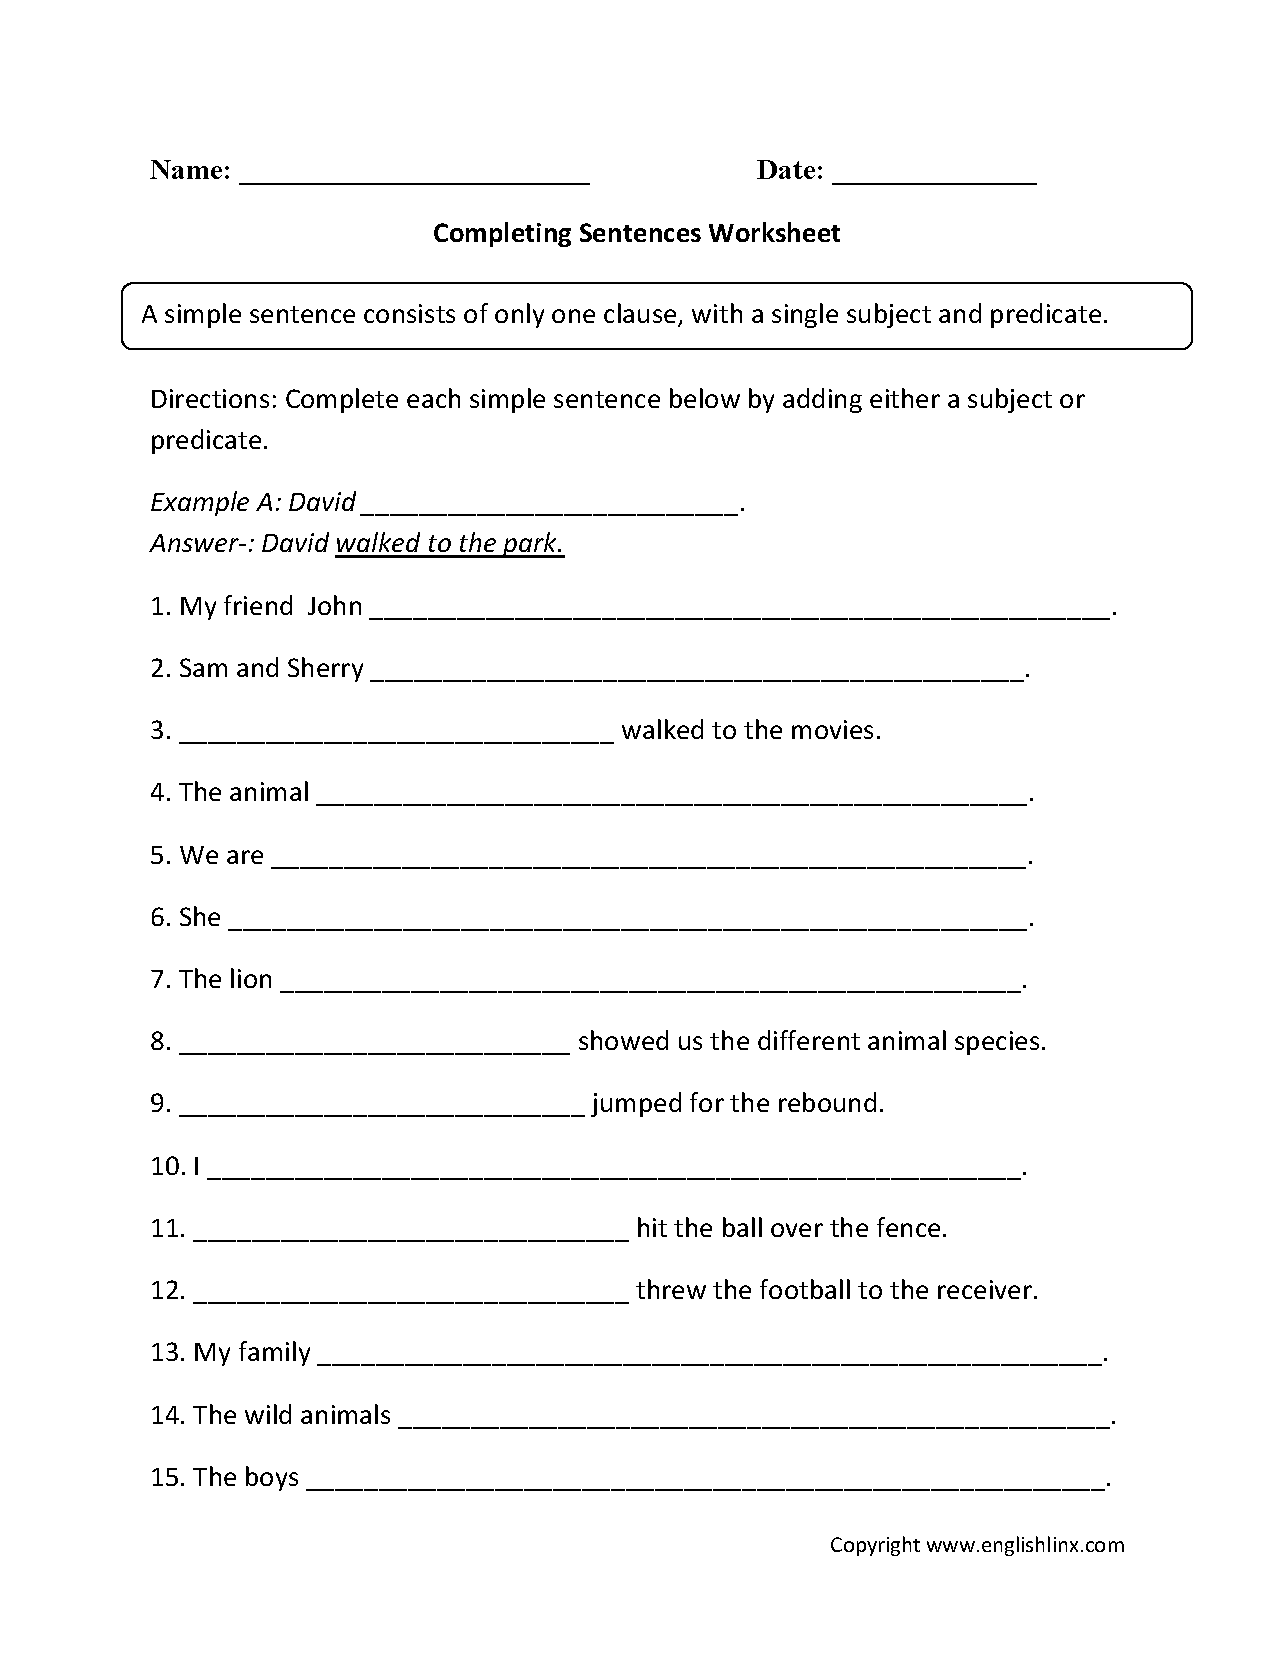 context-clues-worksheets-6th-grade-worksheets-master